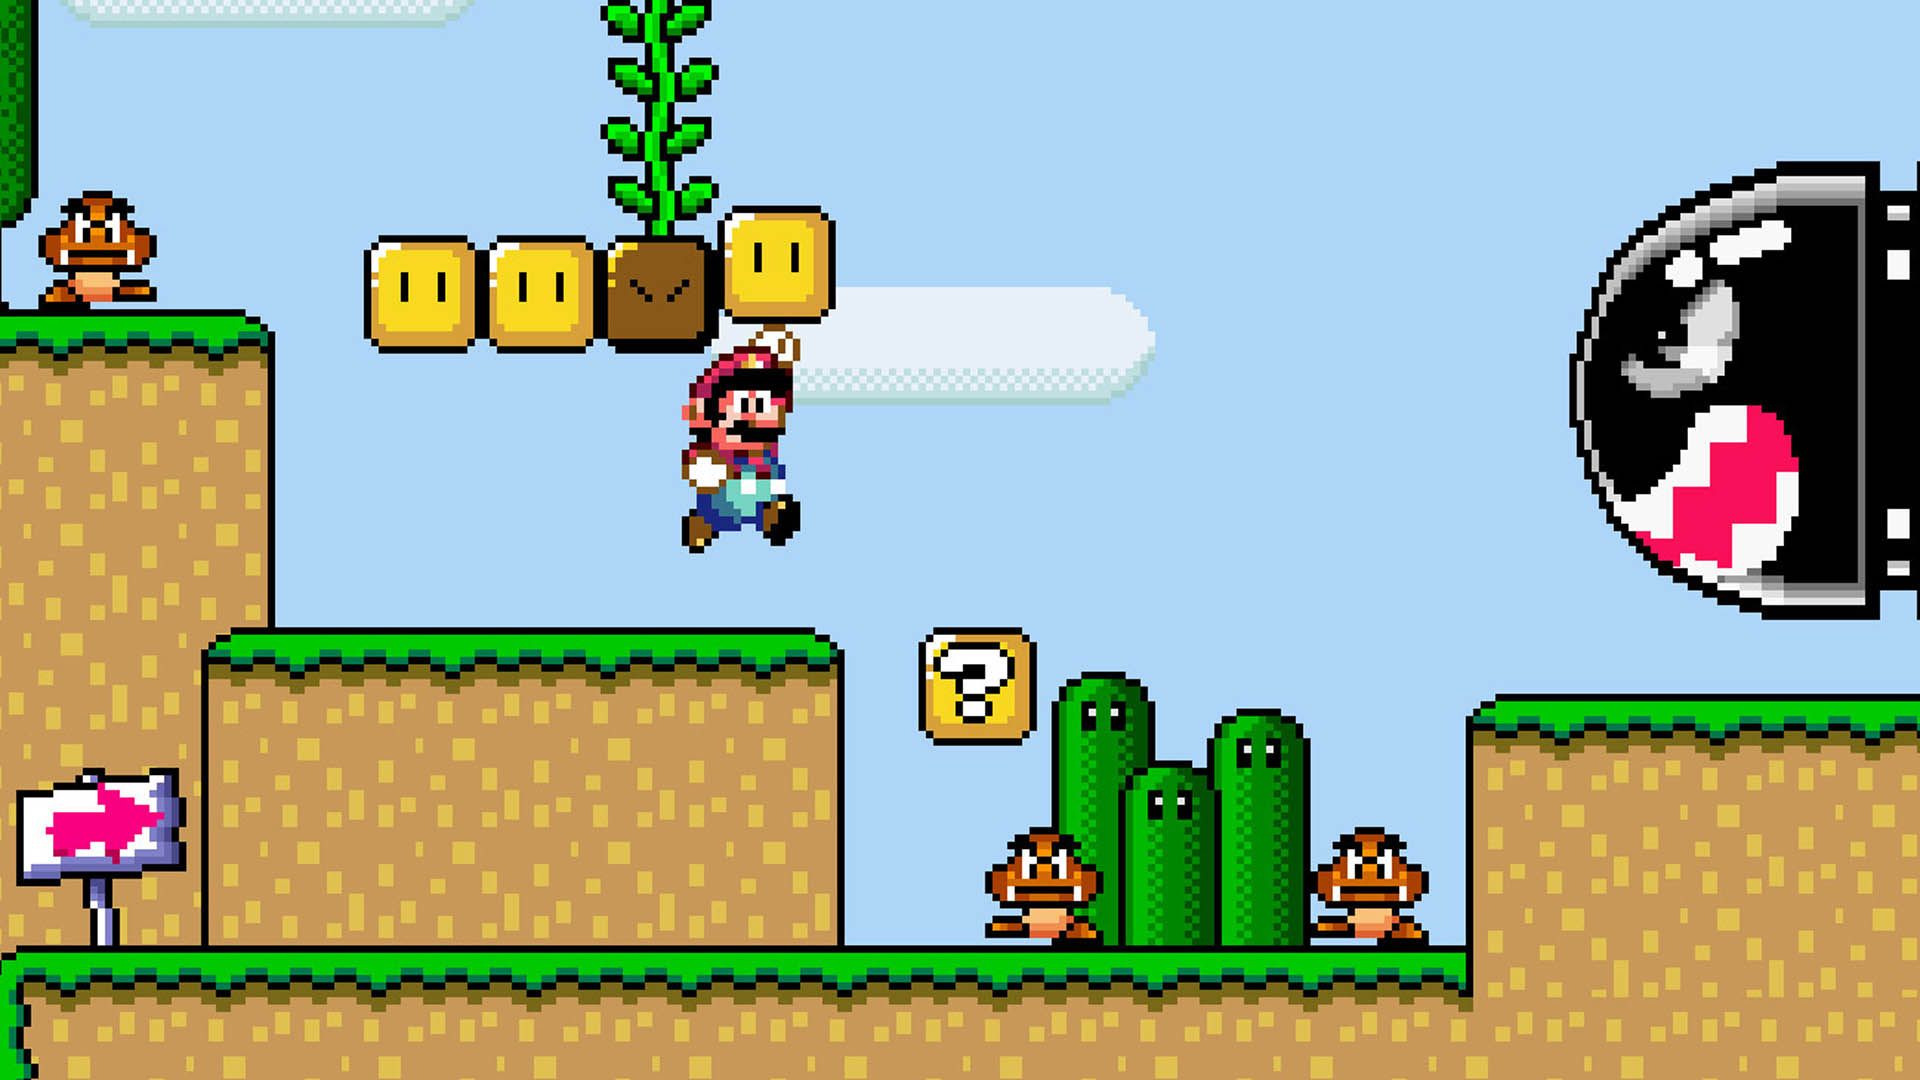 Mario jumping and hitting a block in Super Mario World